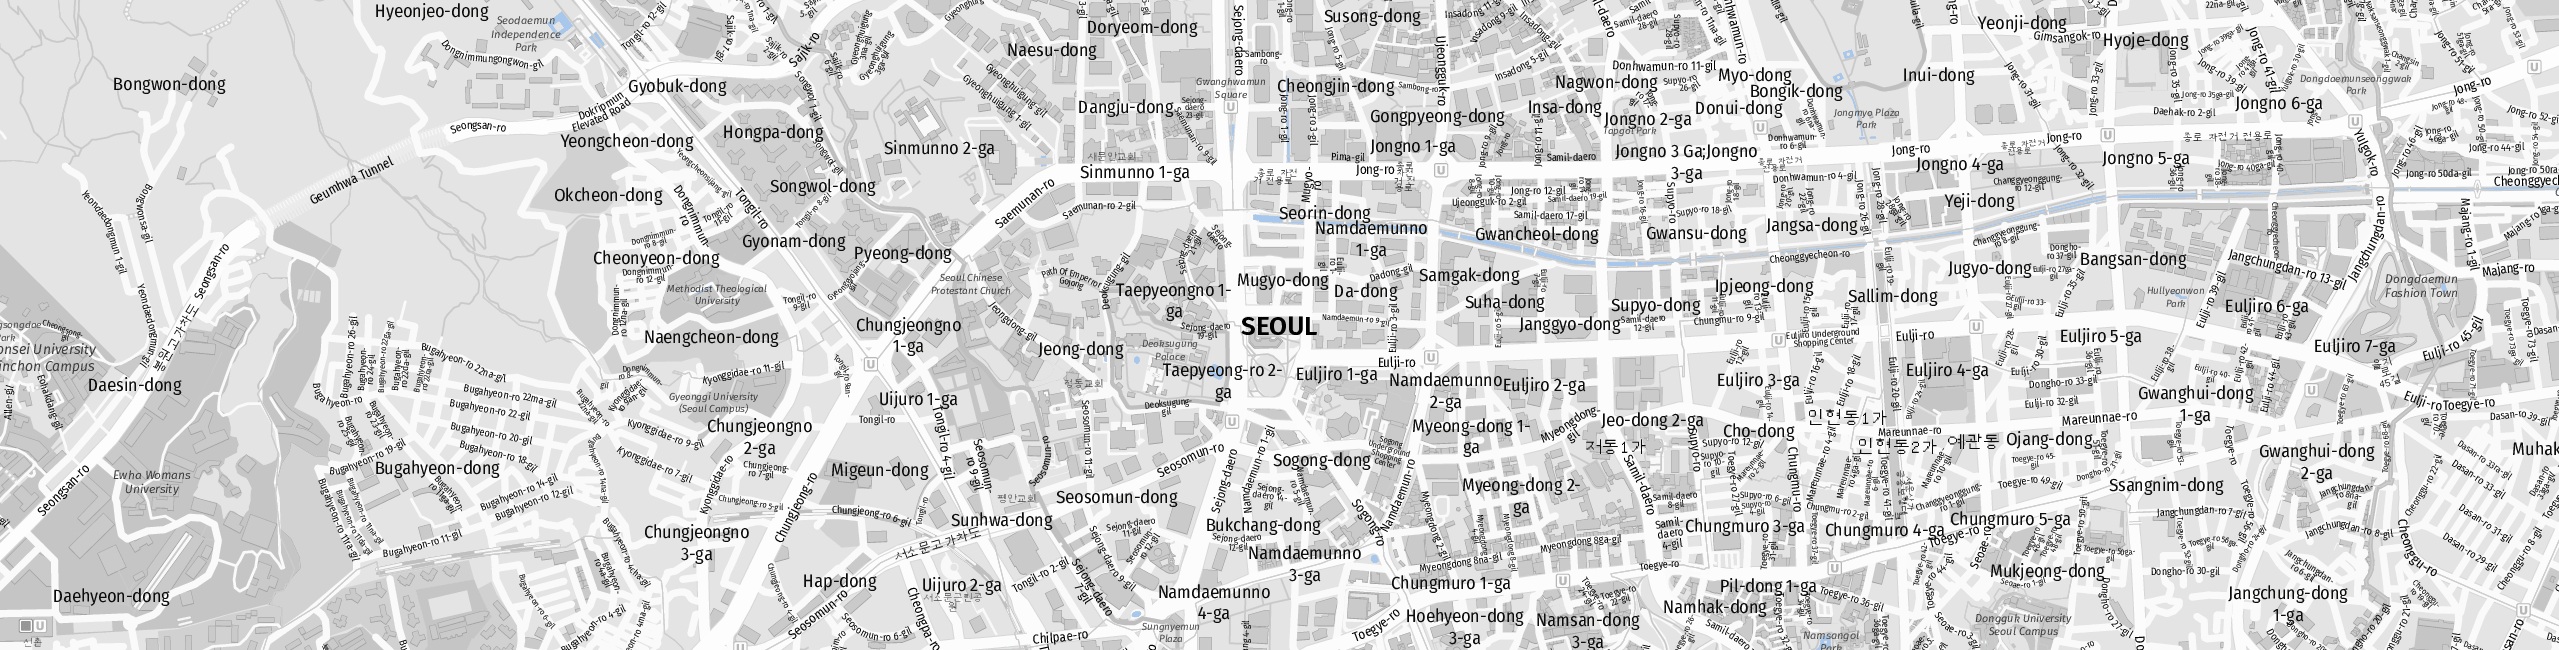 Stadtplan Seoul zum Downloaden.